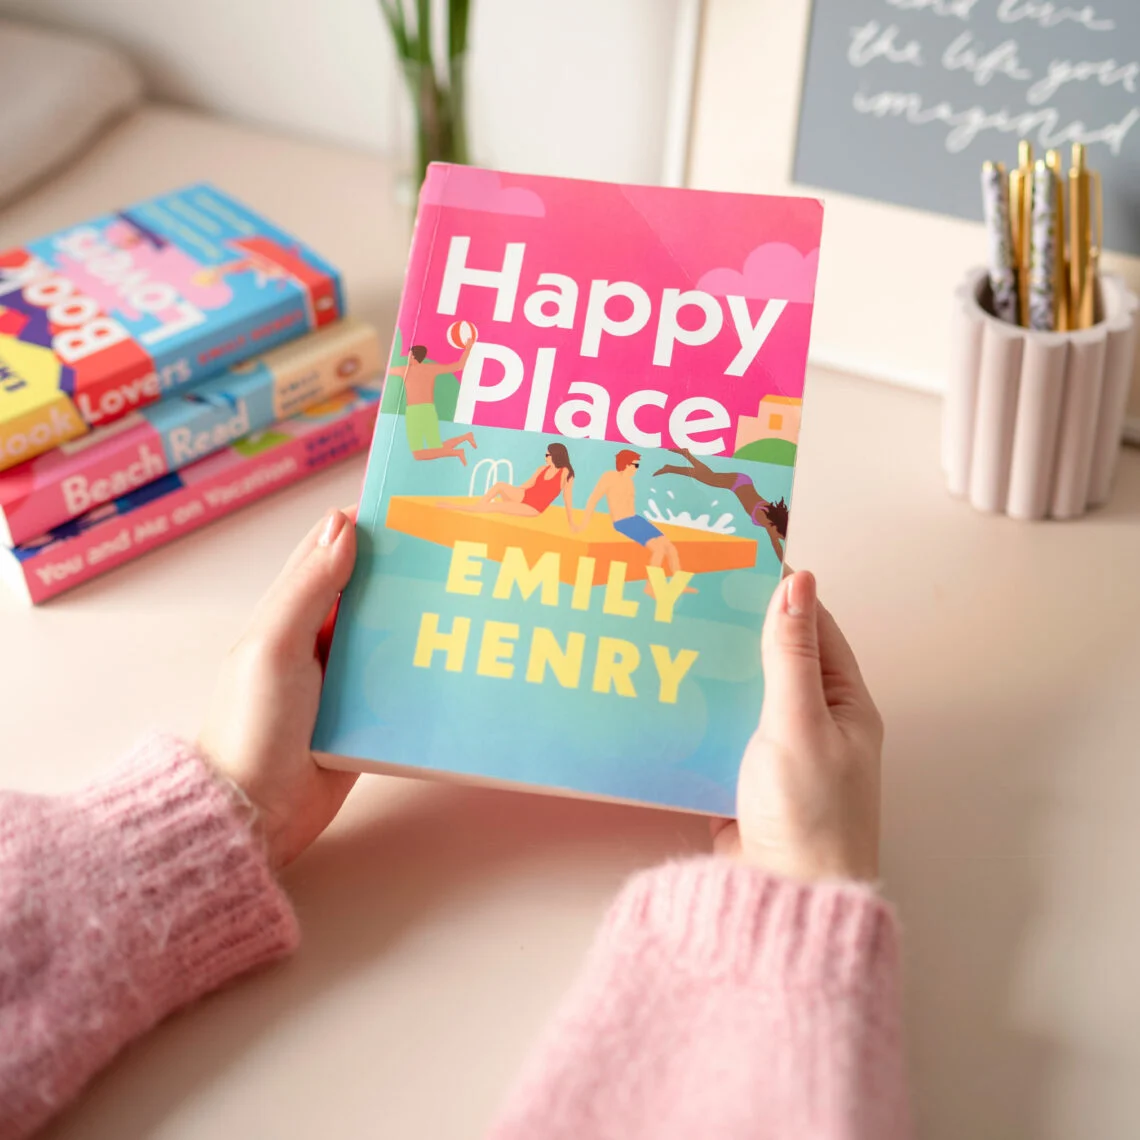 Happy Place by Emily Henry: A Booktok Sensation